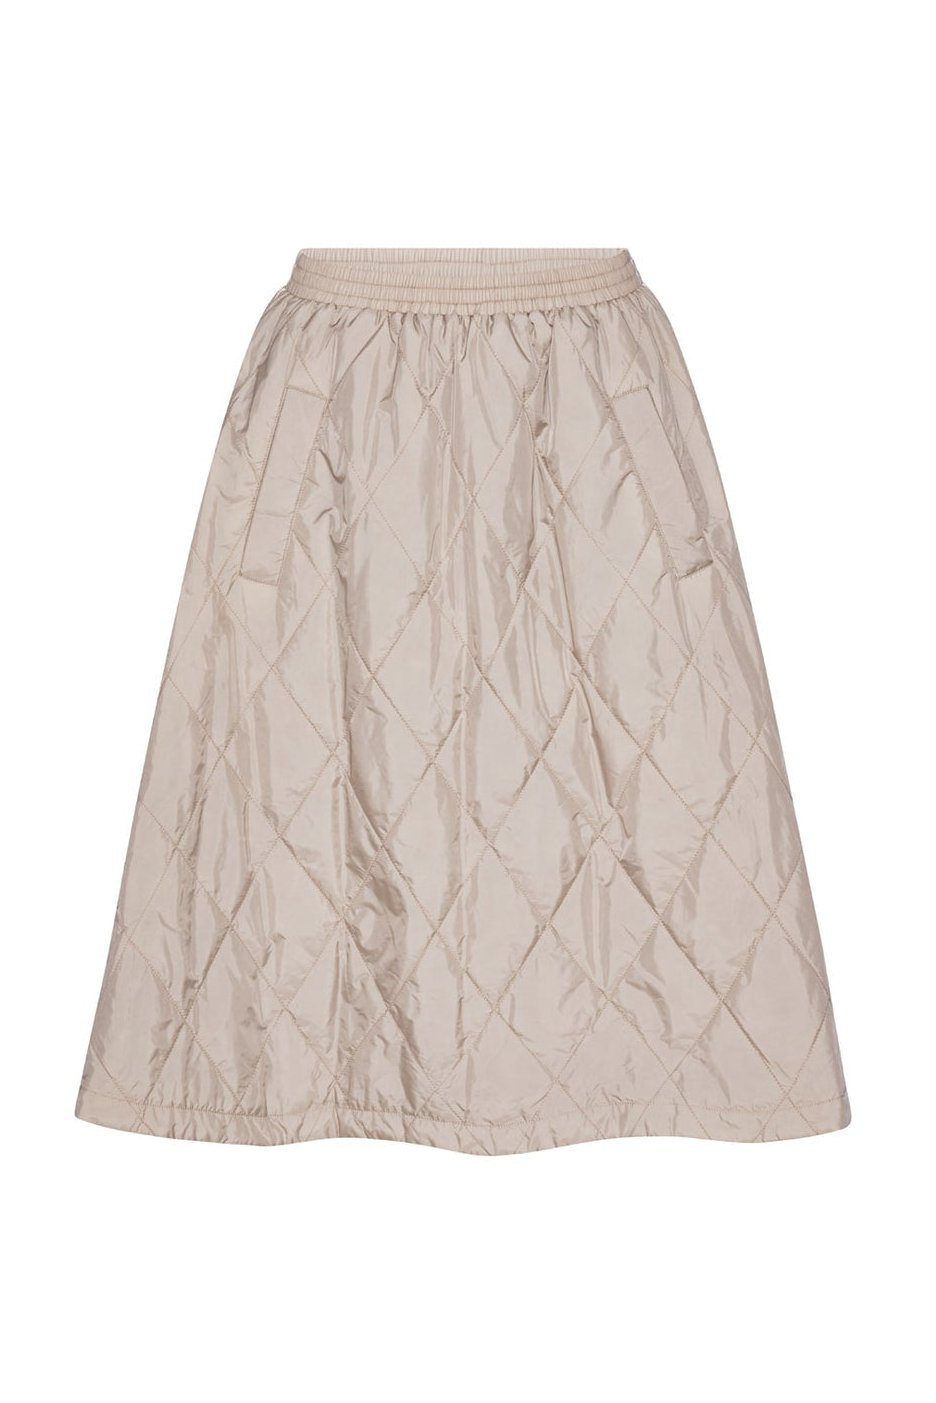 Nederdel | Project AJ117 Nicoline skirt, kit